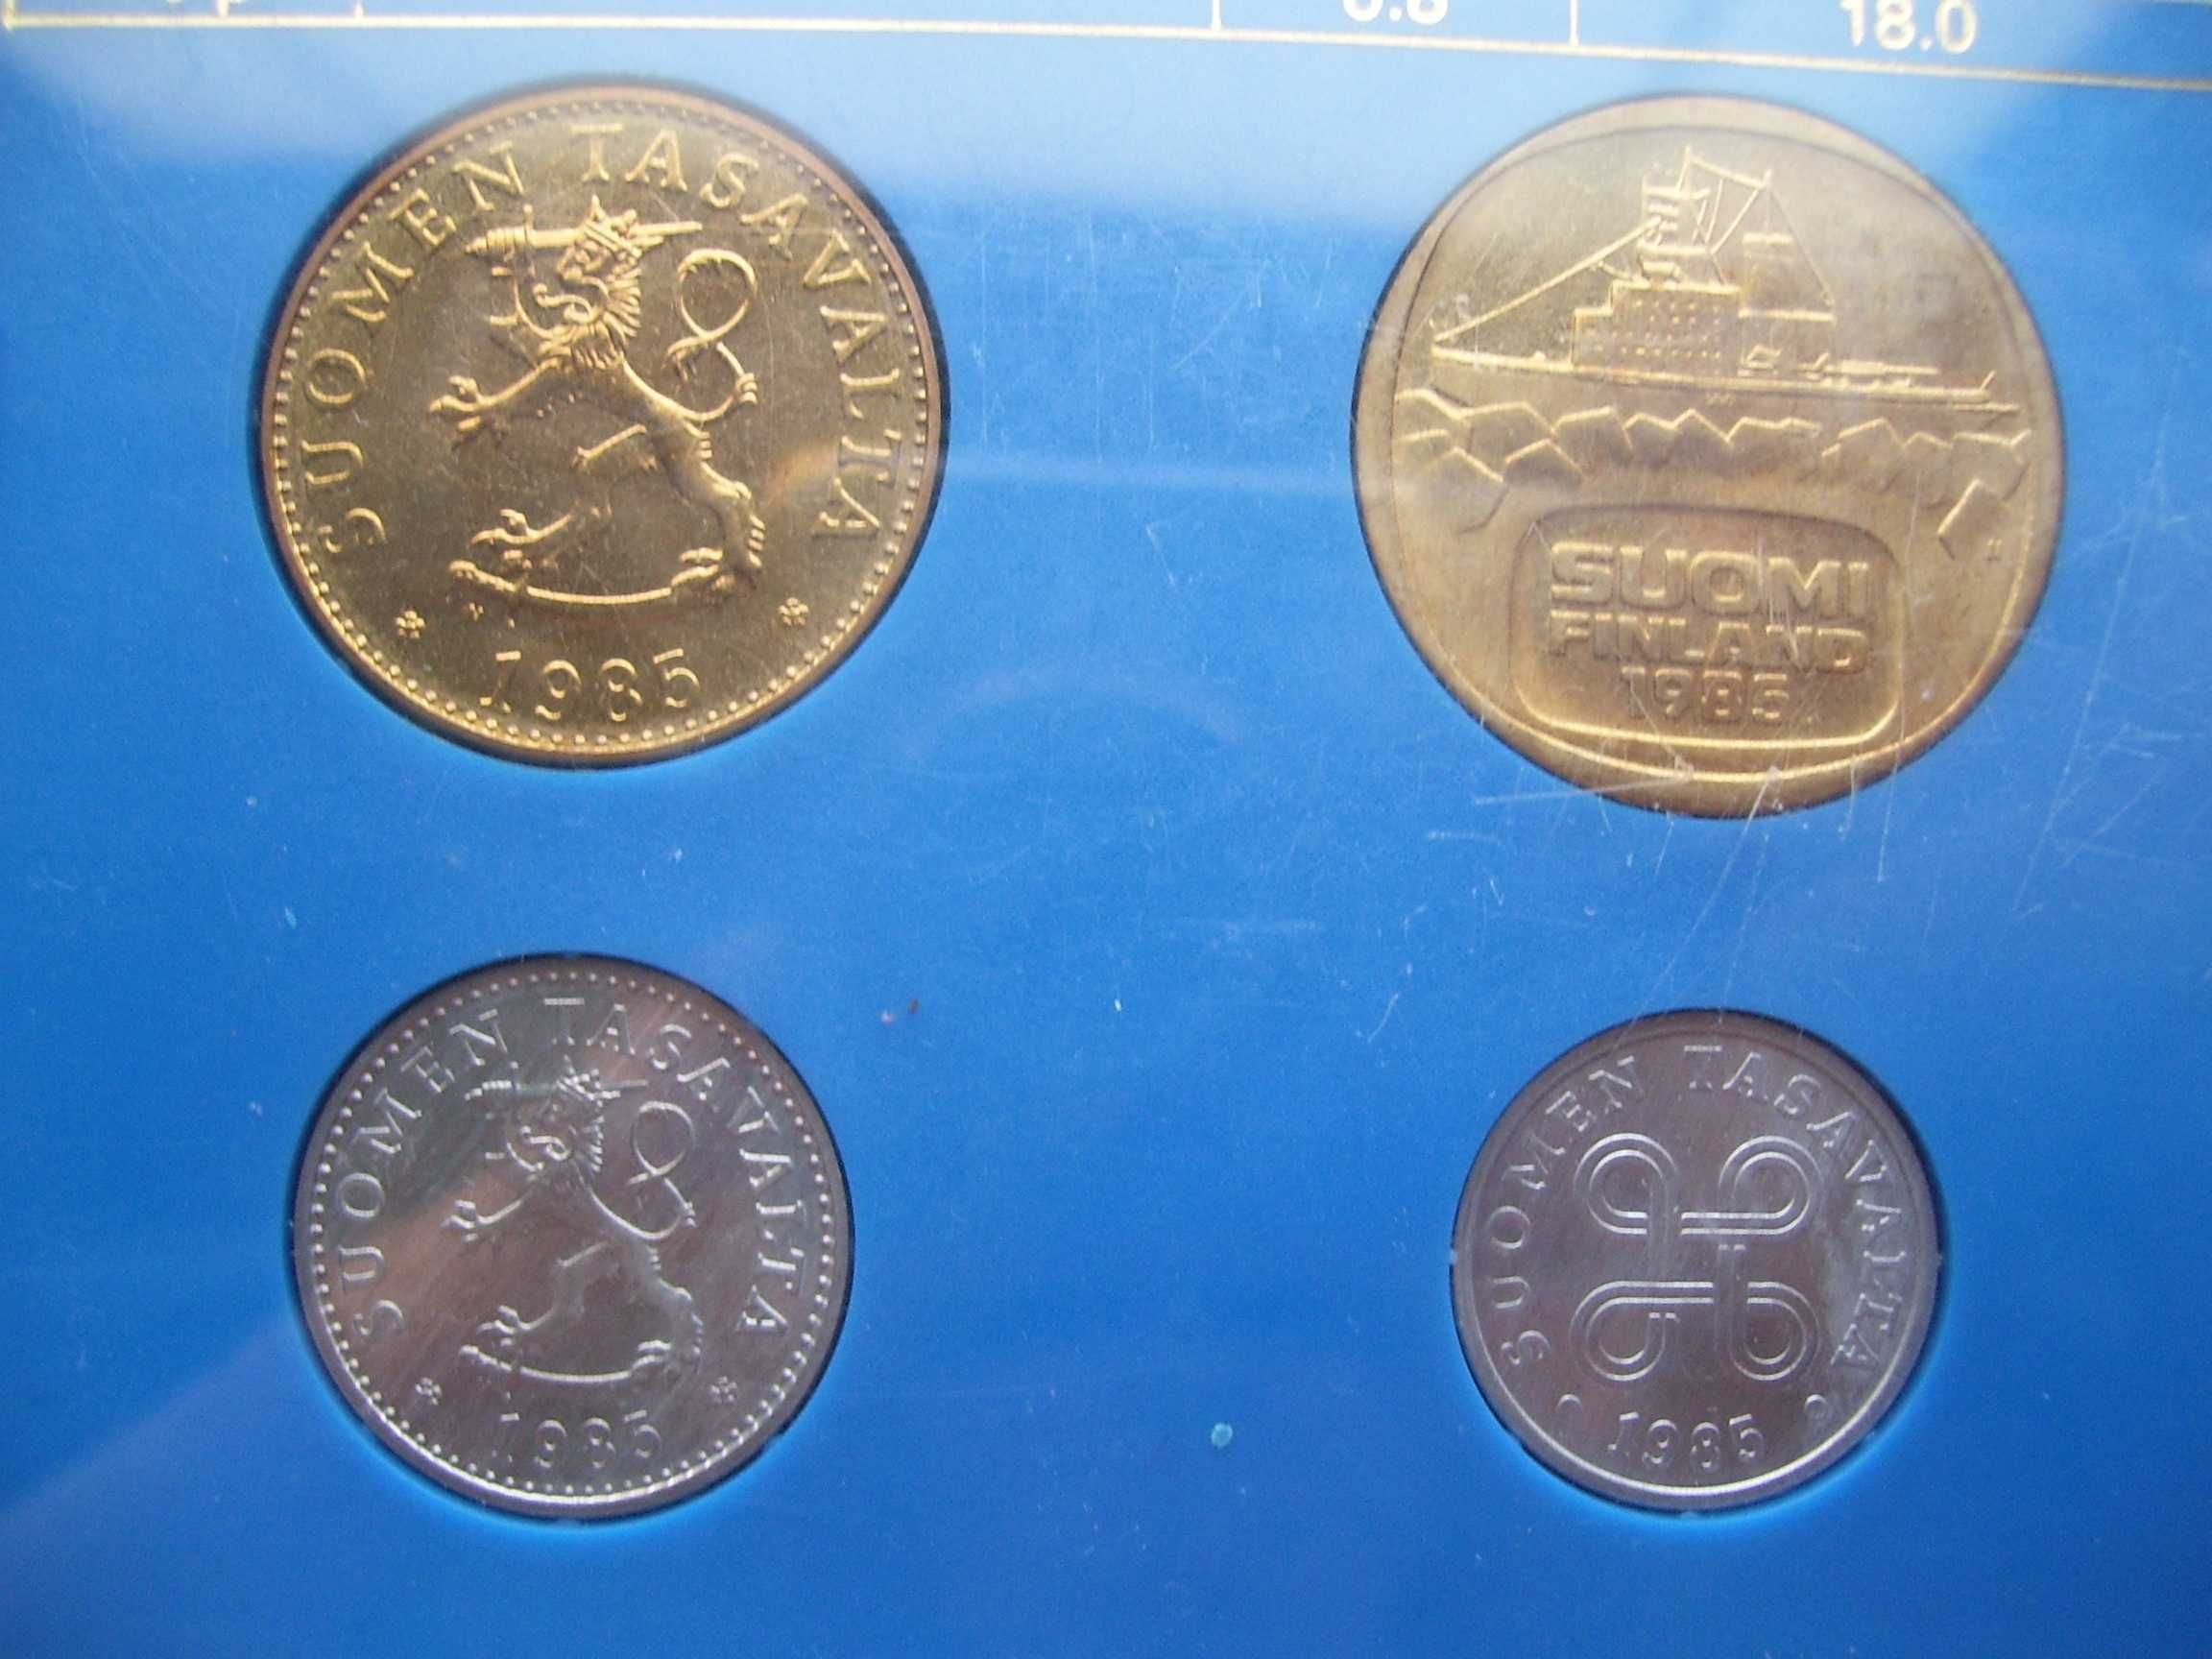 Stare monety Finlandia rocznik 1985 stan menniczy